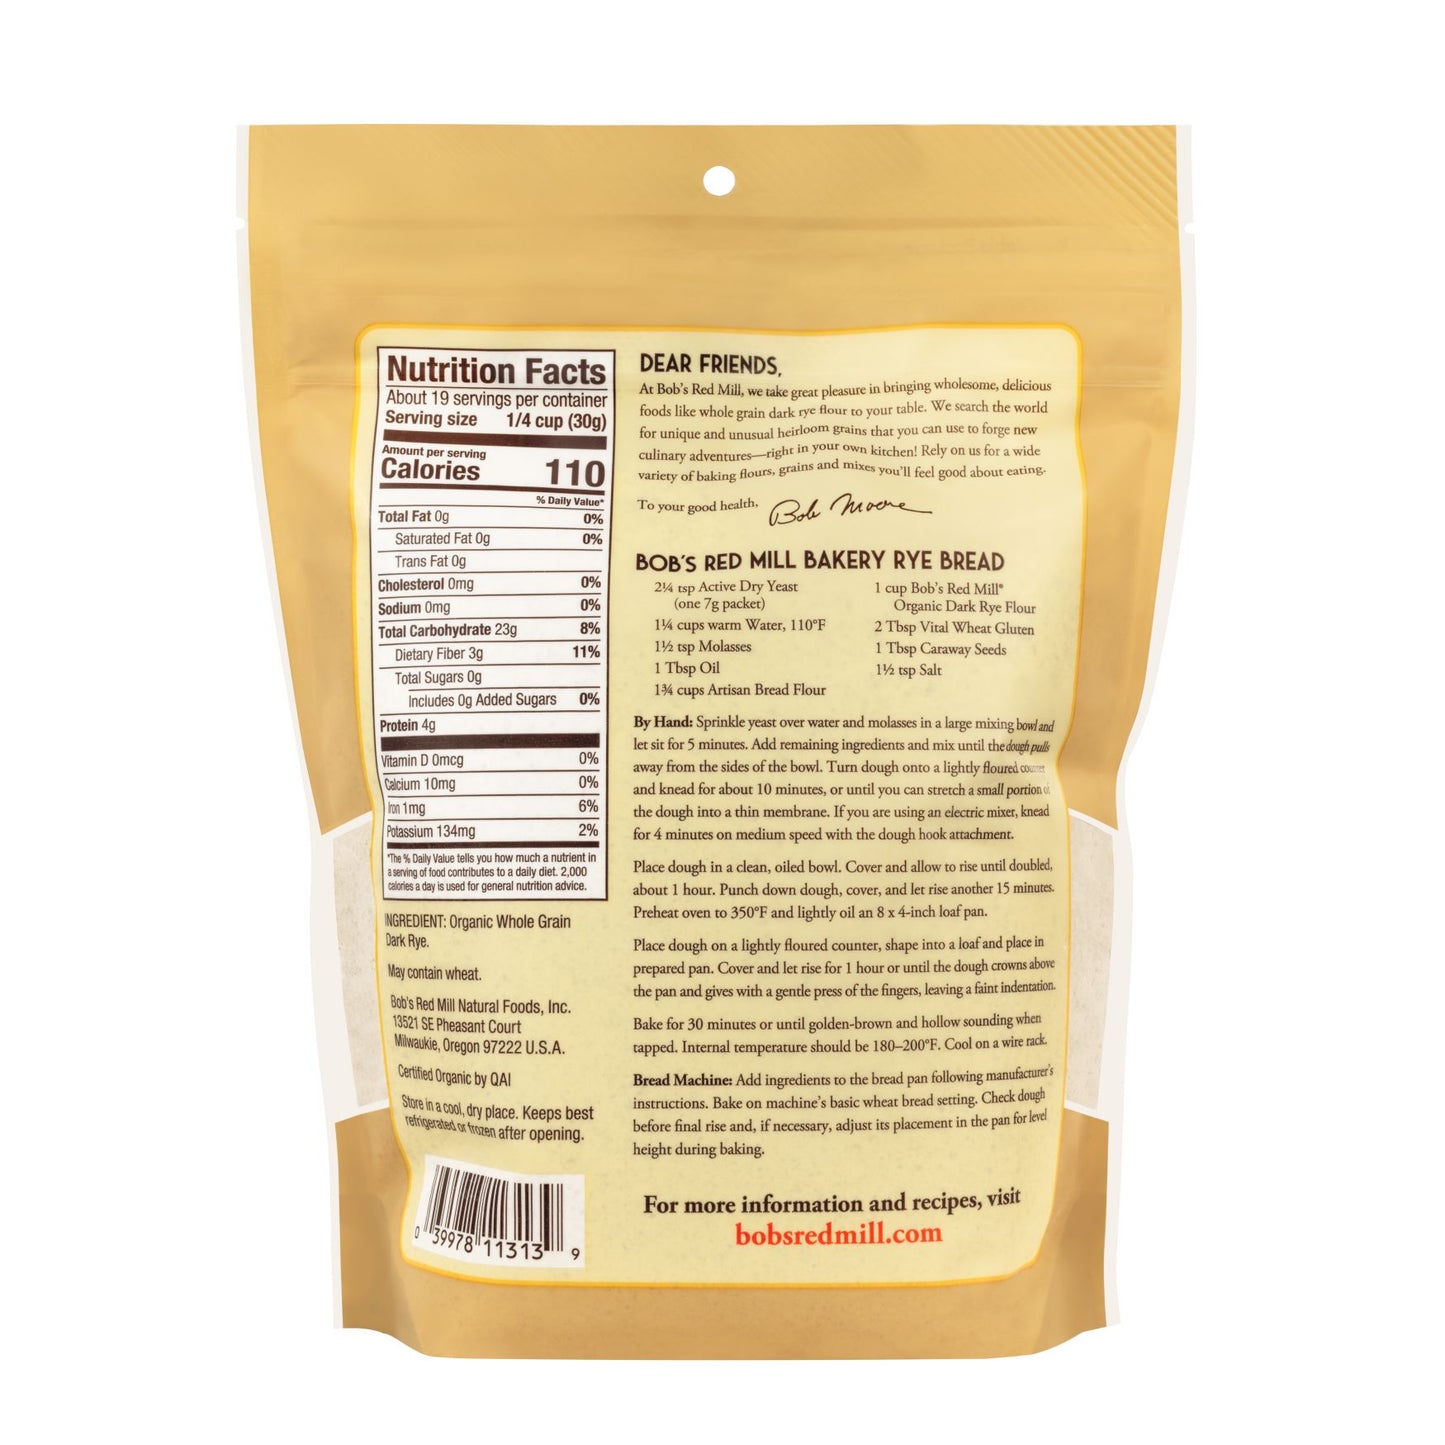 Bob's Red Mill Dark Rye Flour 567g, Certified Organic & Non GMO